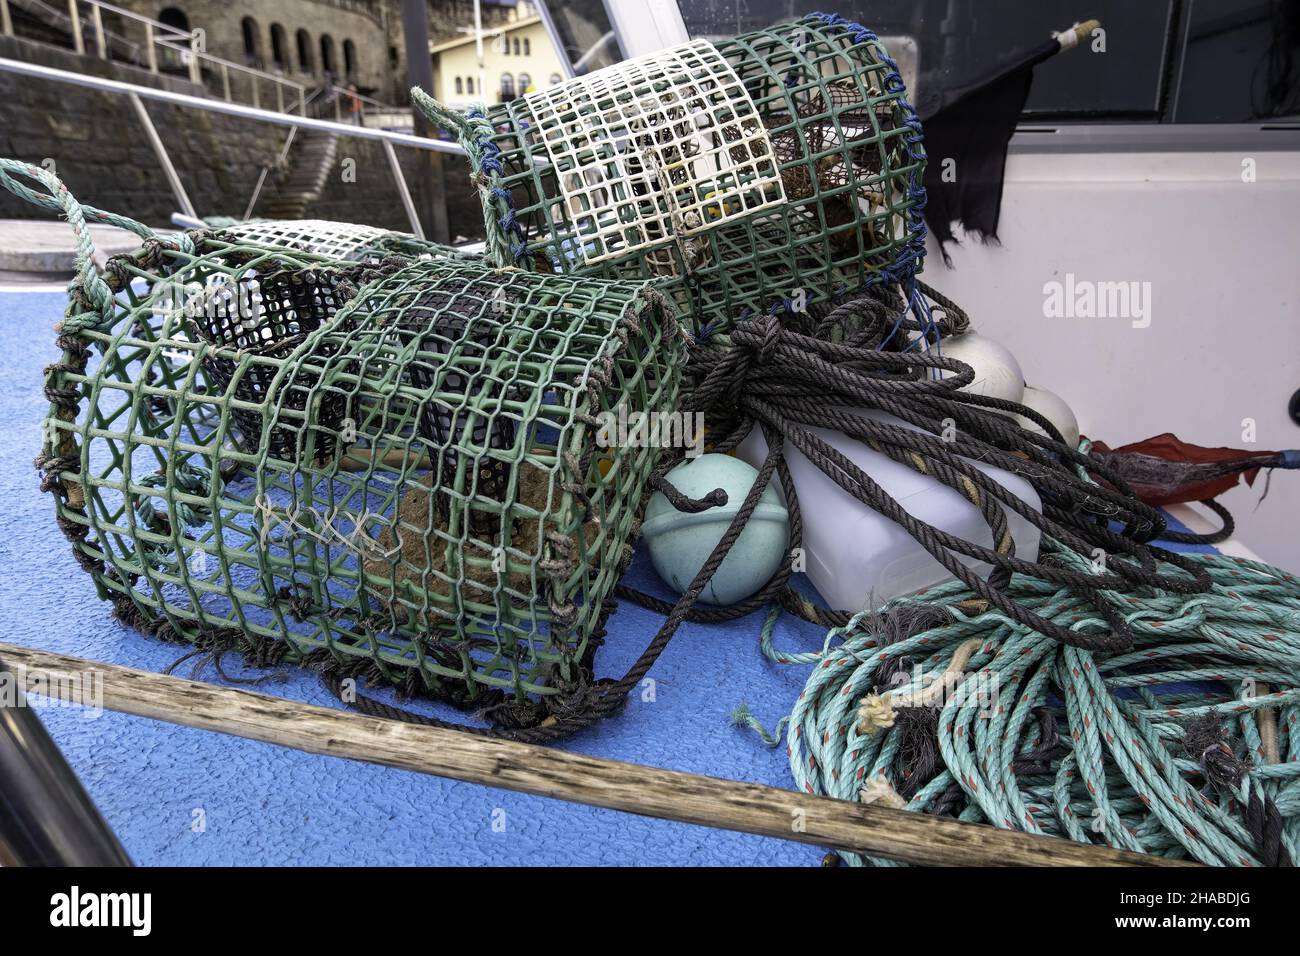 Fish in Fishing Net. Animal. Stock Photo - Image of mesh, industrial:  97650944